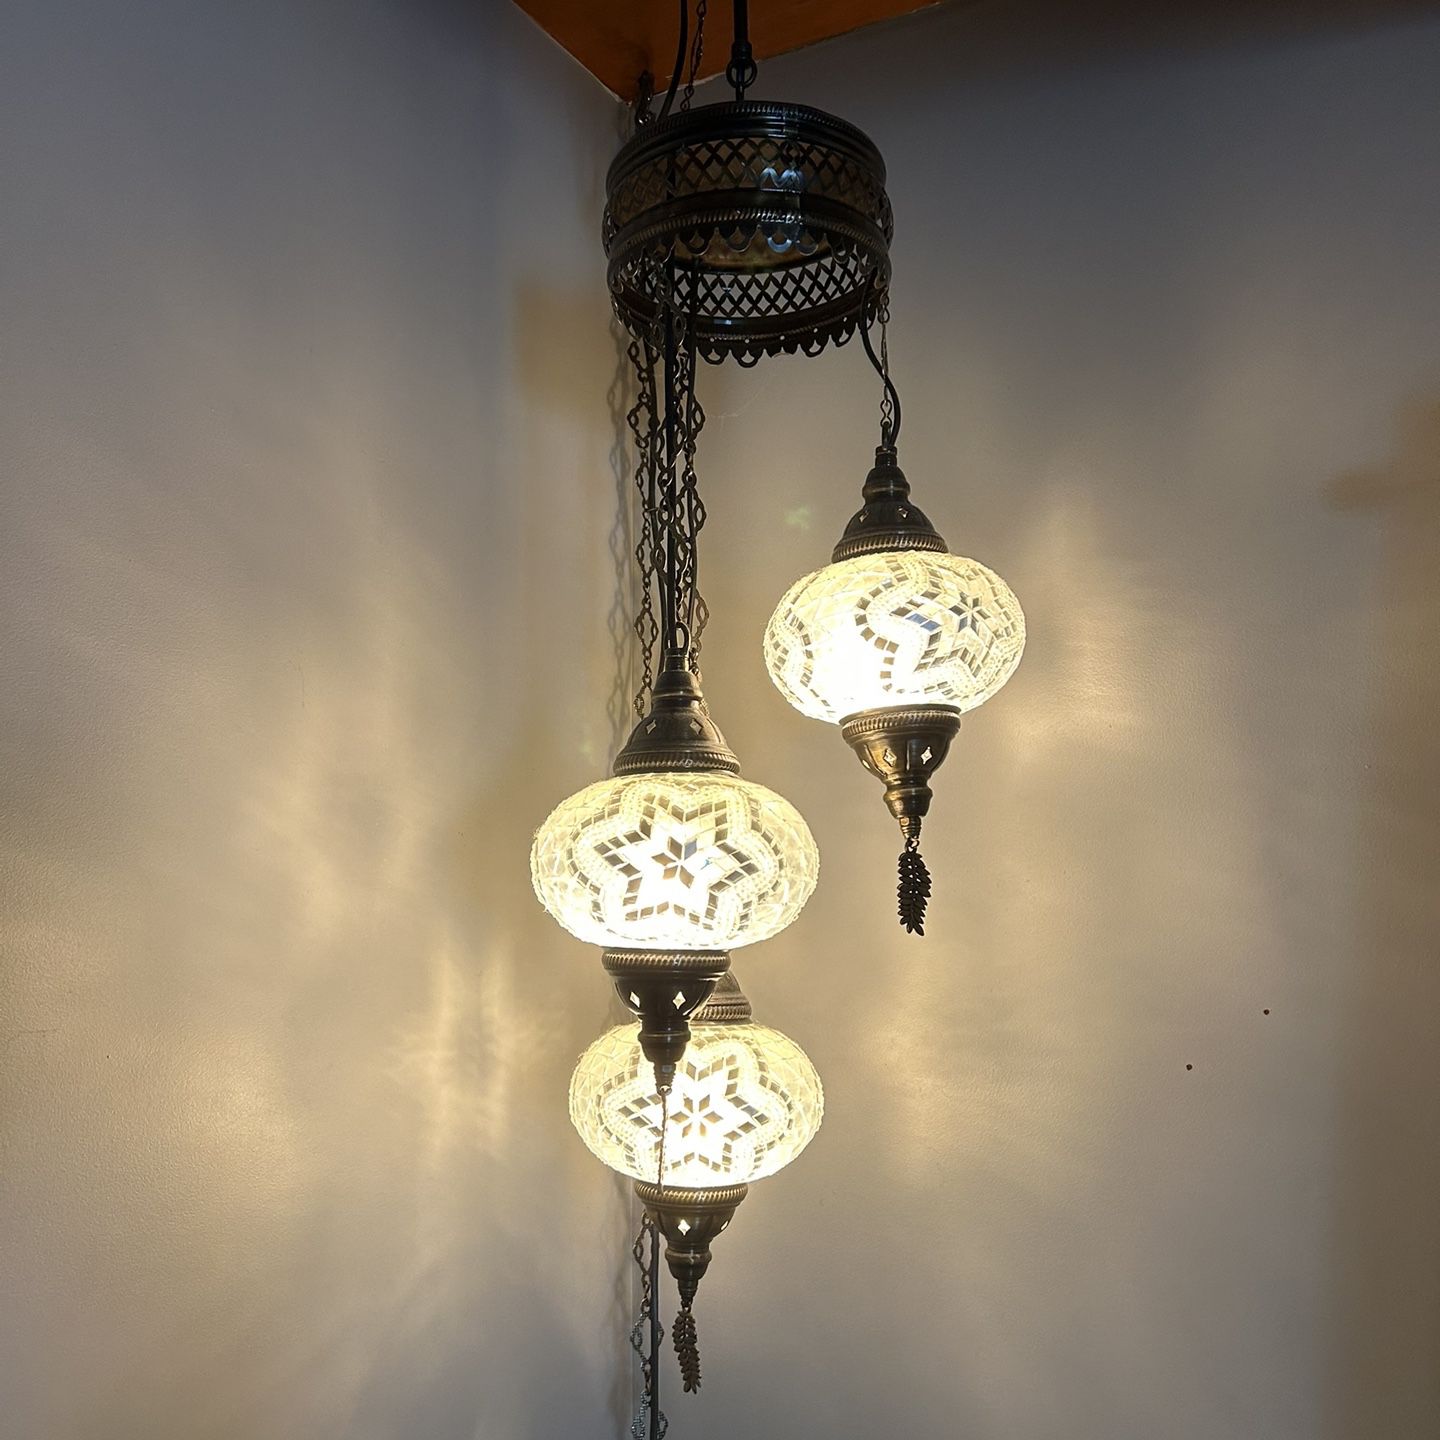 Mosaic Hanging Lamp Pendant Light Fixture $60